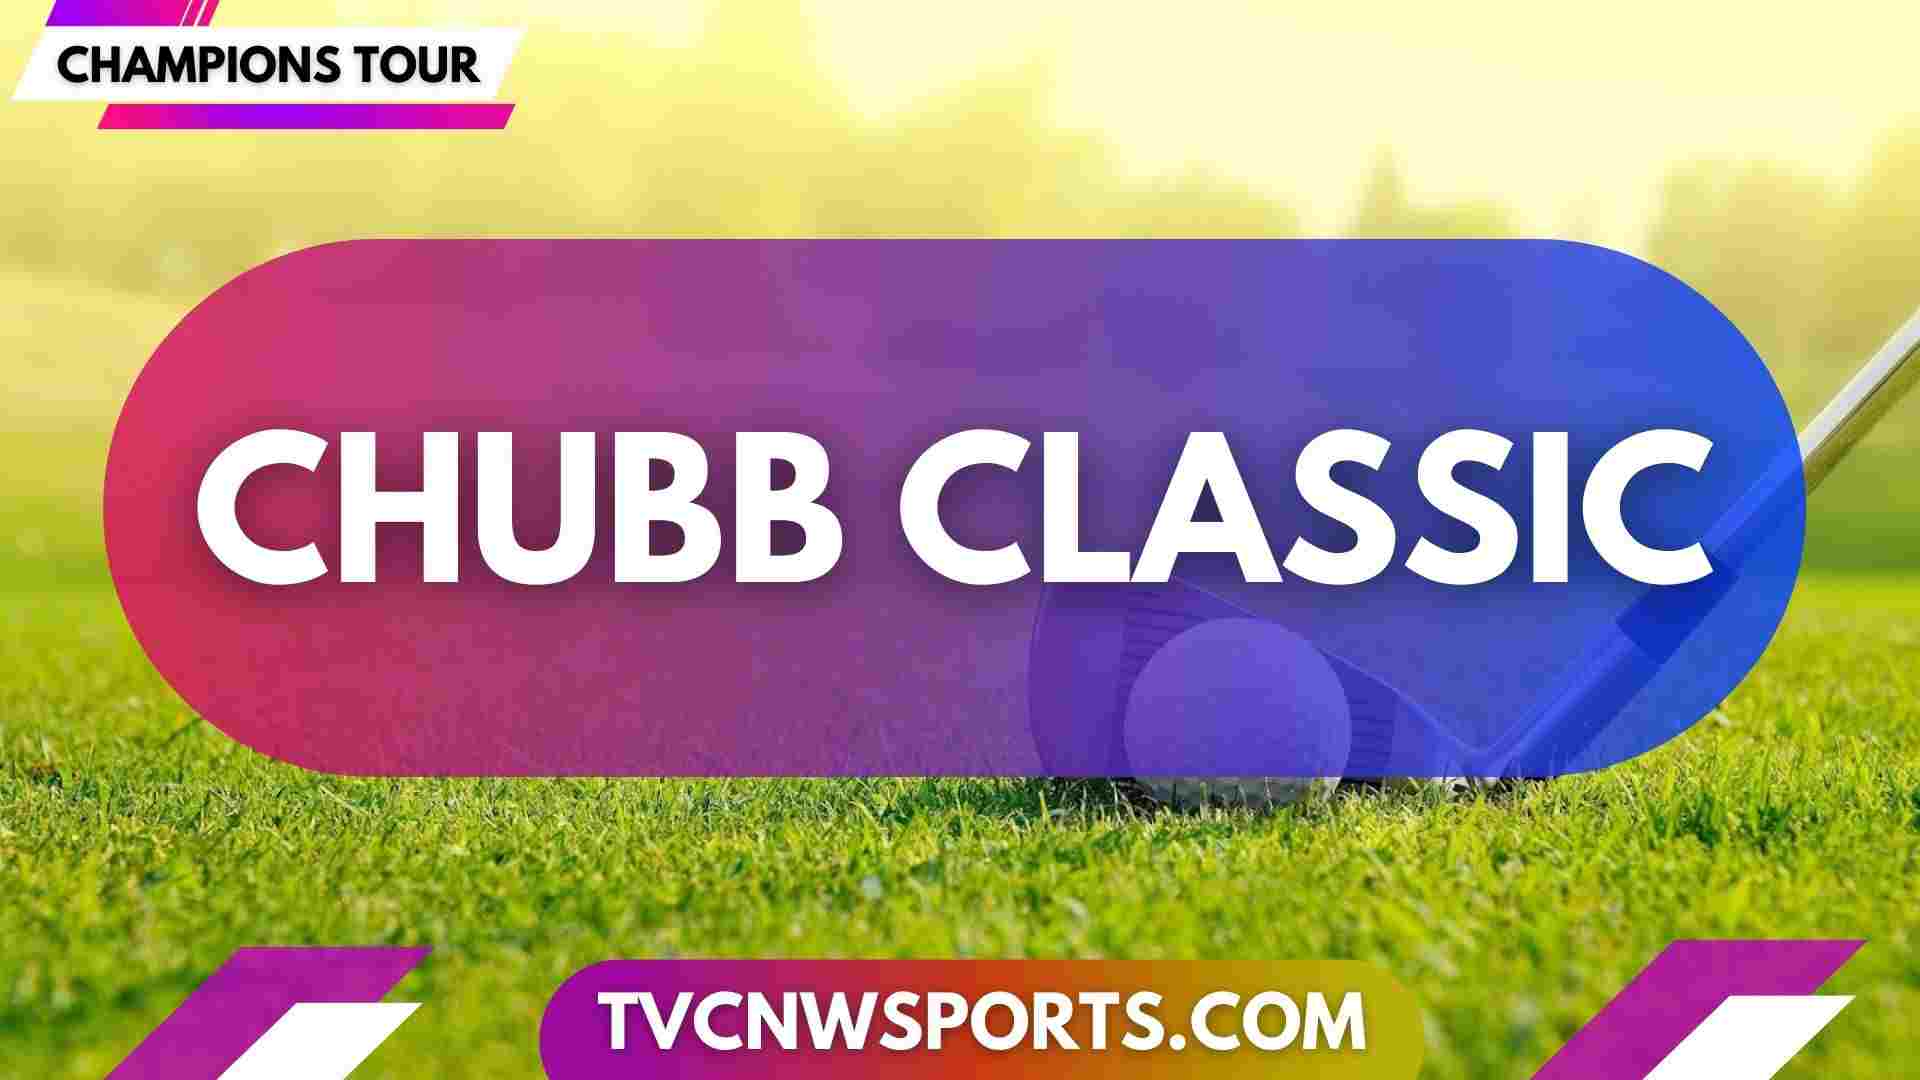 Chubb Classic Champions Tour Golf